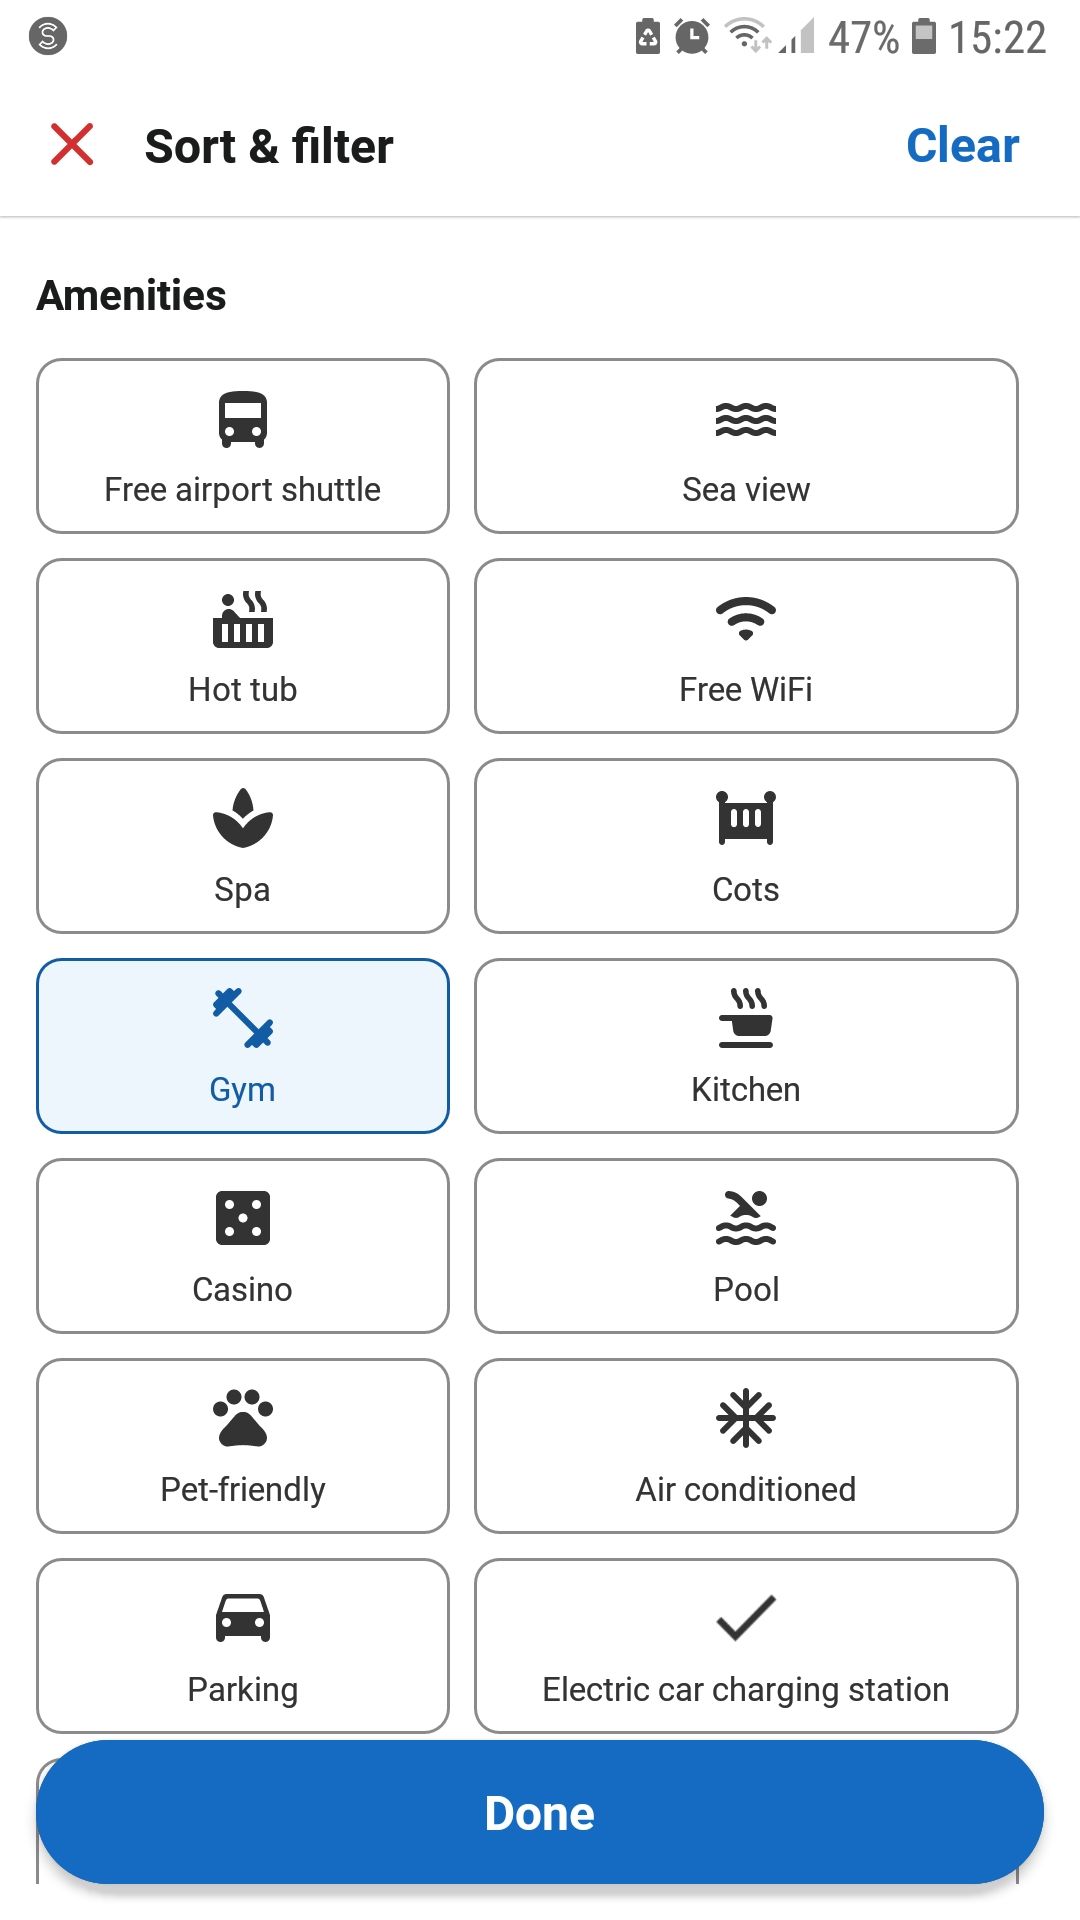 Hotels.com travel booking mobile app filter